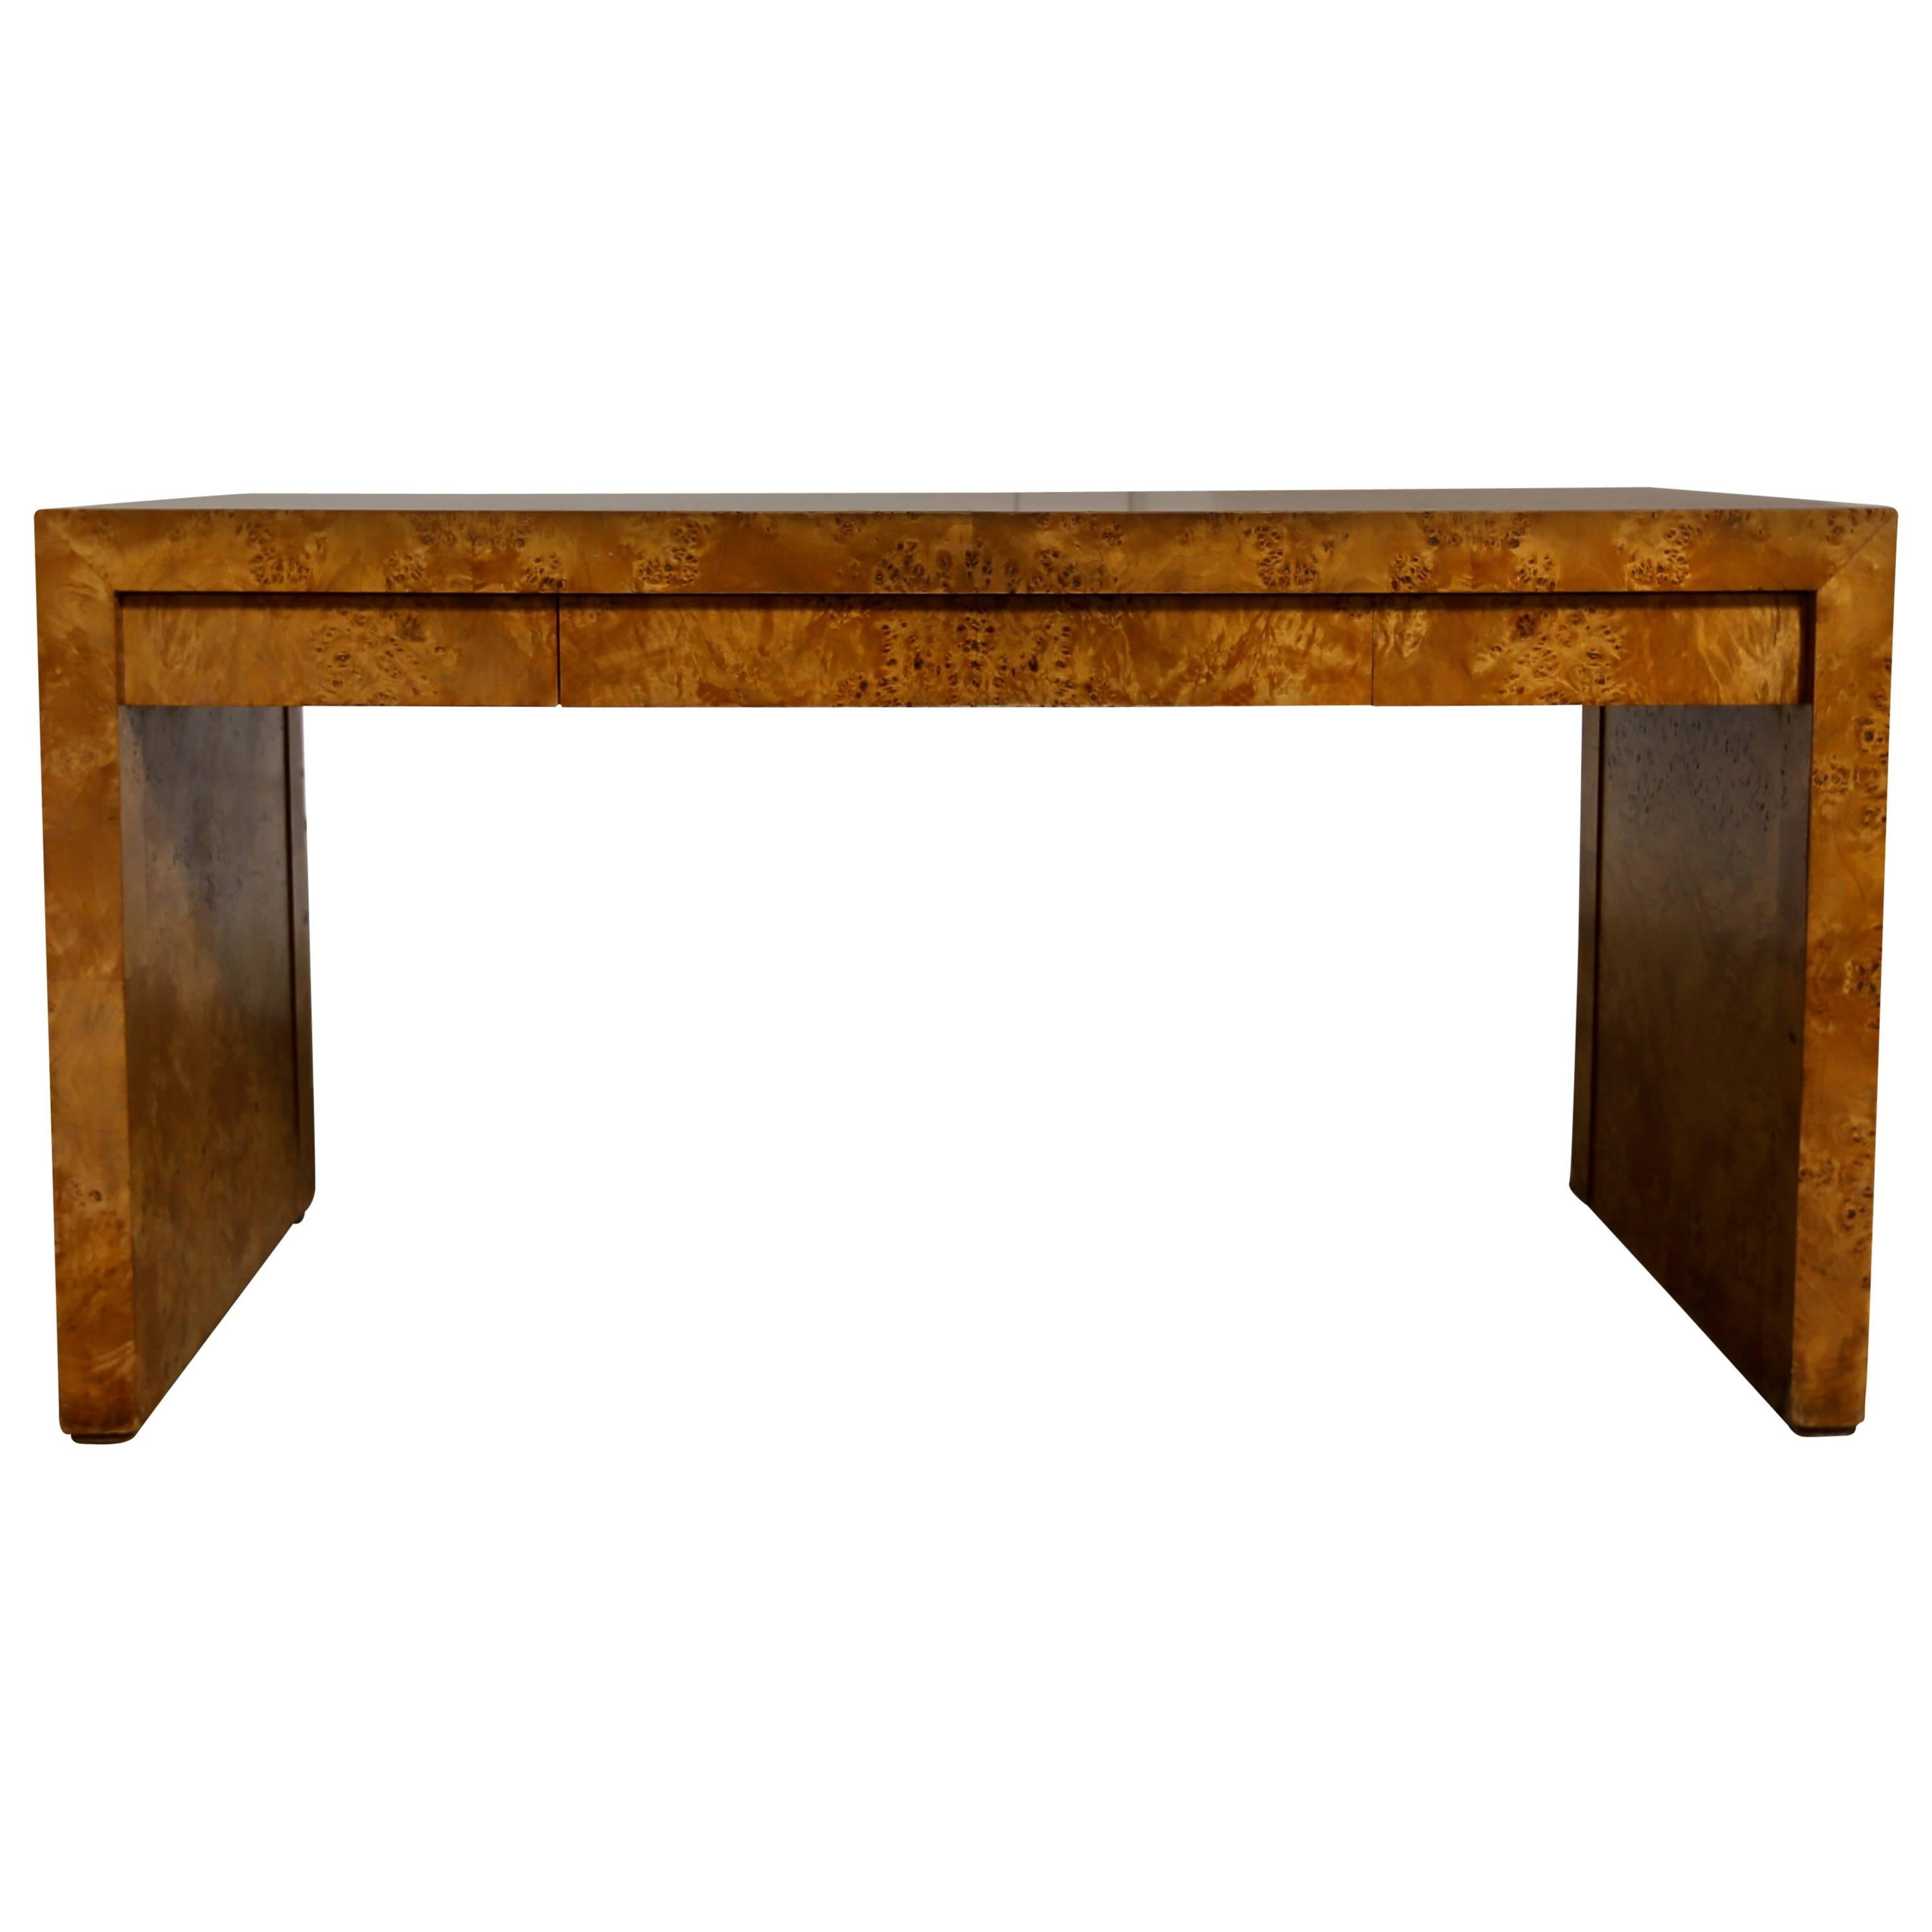 Burled Wood Writing Desk by Hekman Furniture Company